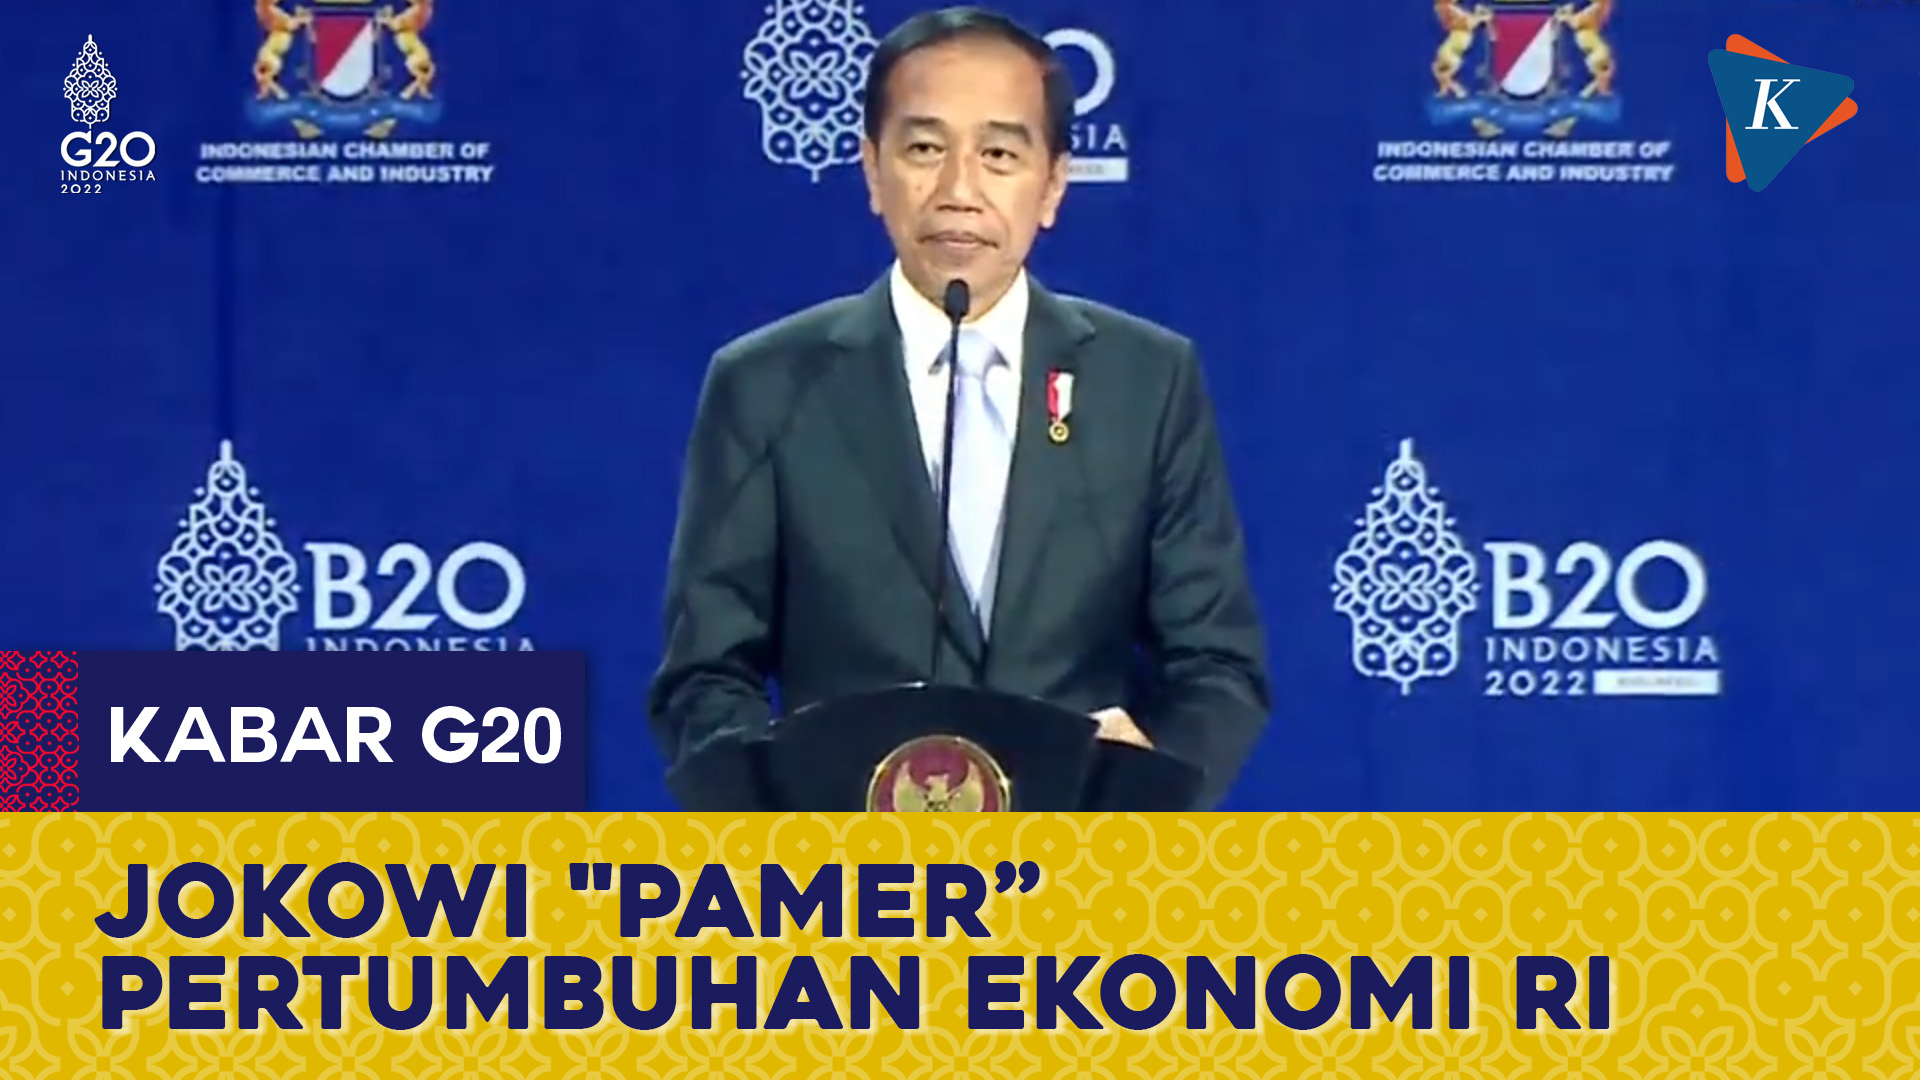 Jokowi Pamerkan Pertumbuhan Ekonomi Indonesia dalam Penutupan B20 Summit